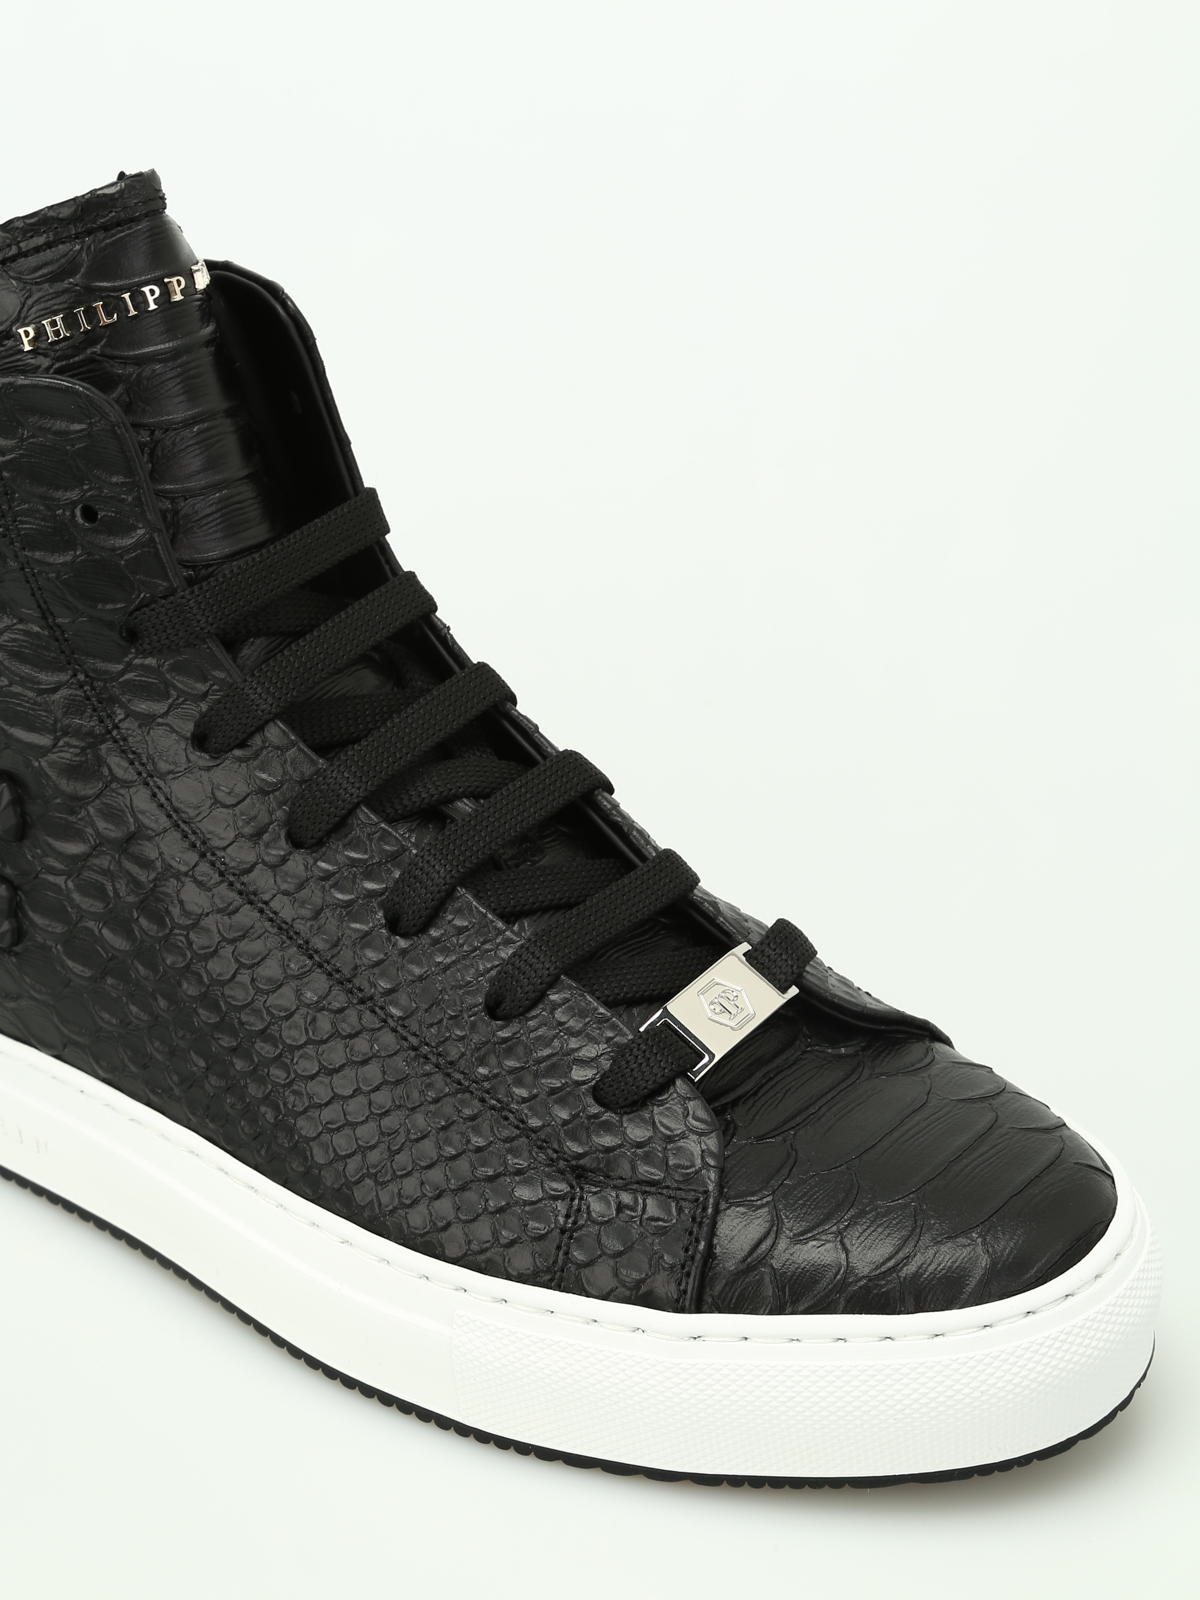 Dolce & Gabbana Crocodile Leather High-Top Sneaker